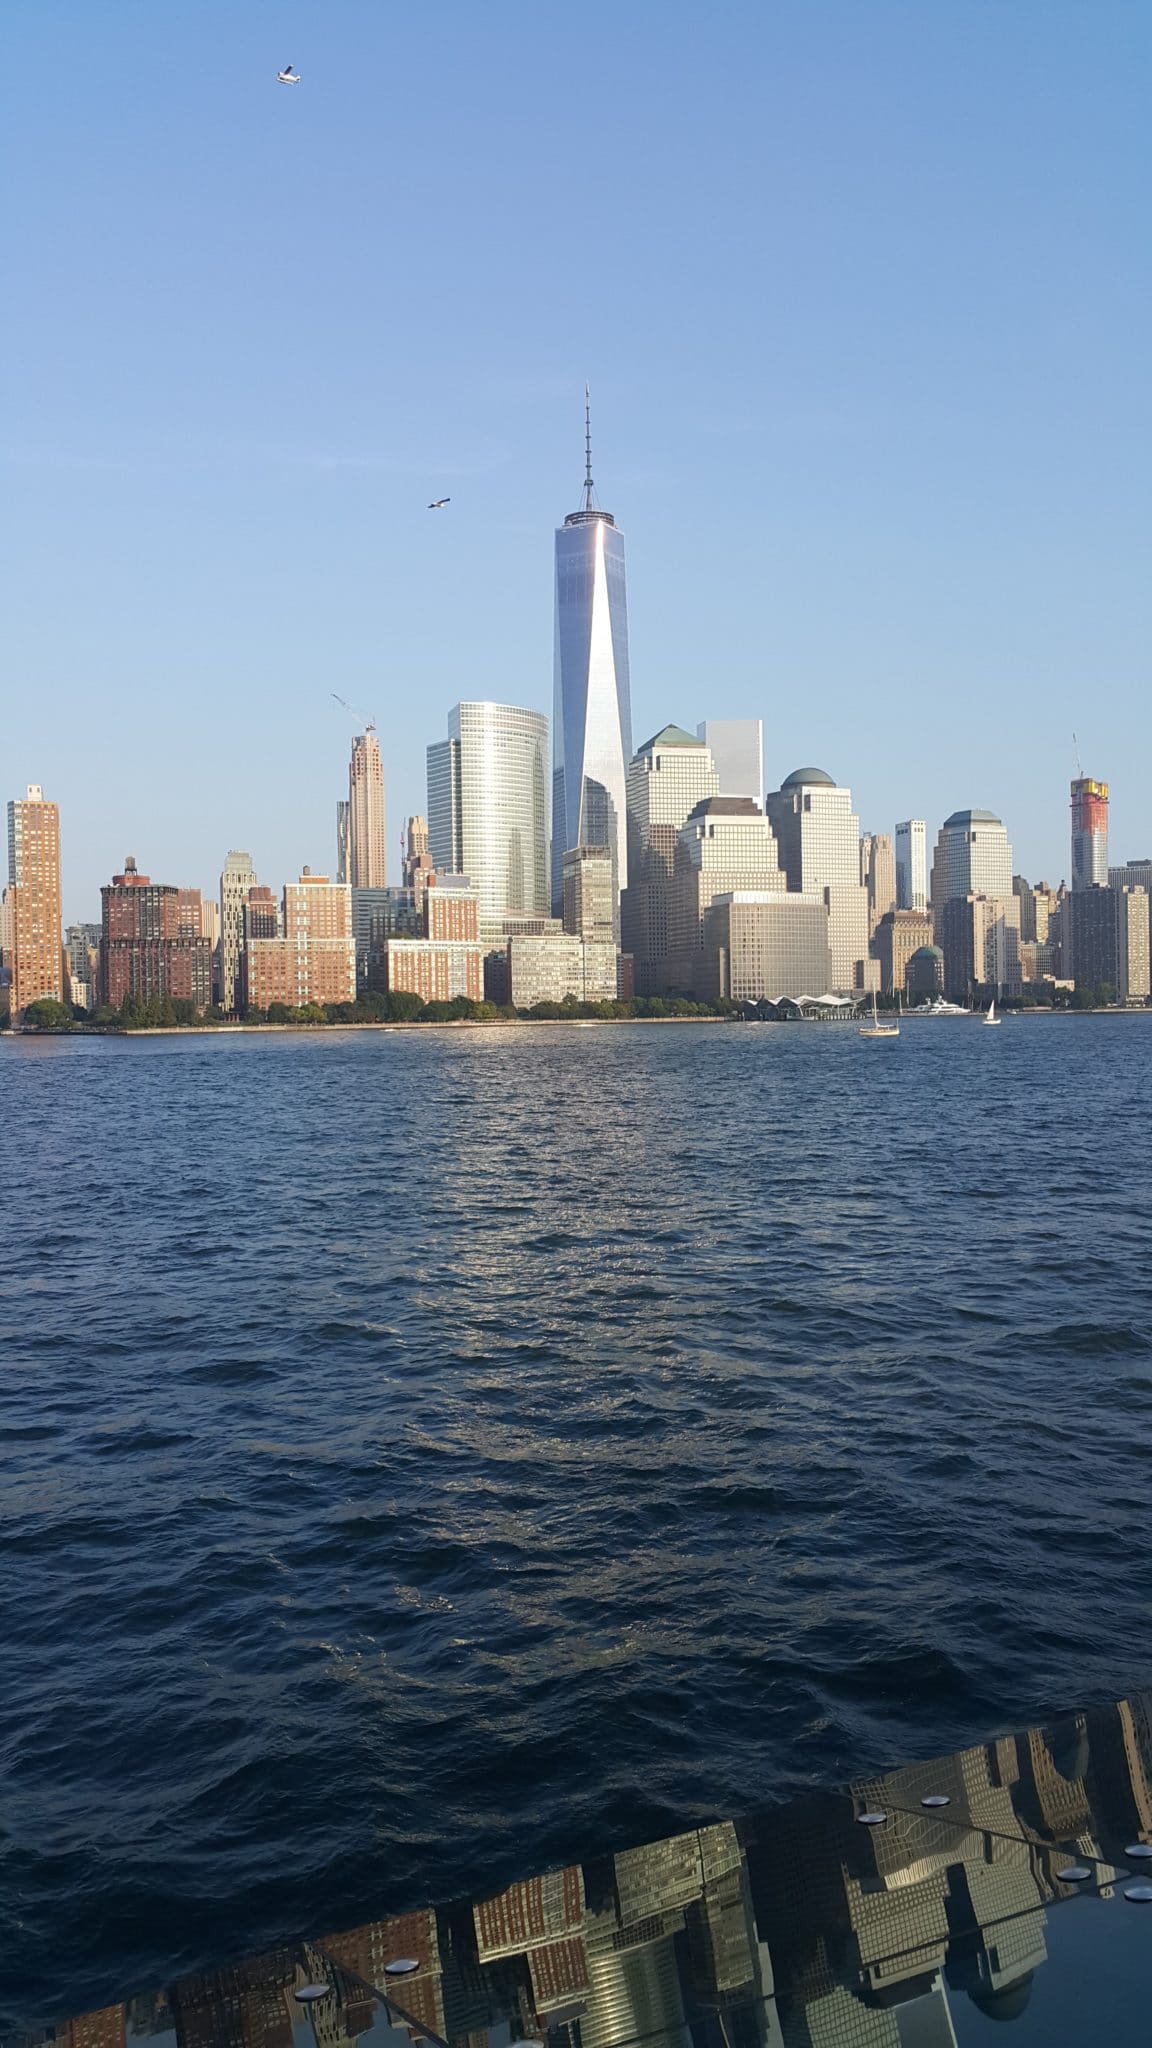 Rebuilt after 9/11, World Trade Center threatened anew by coronavirus